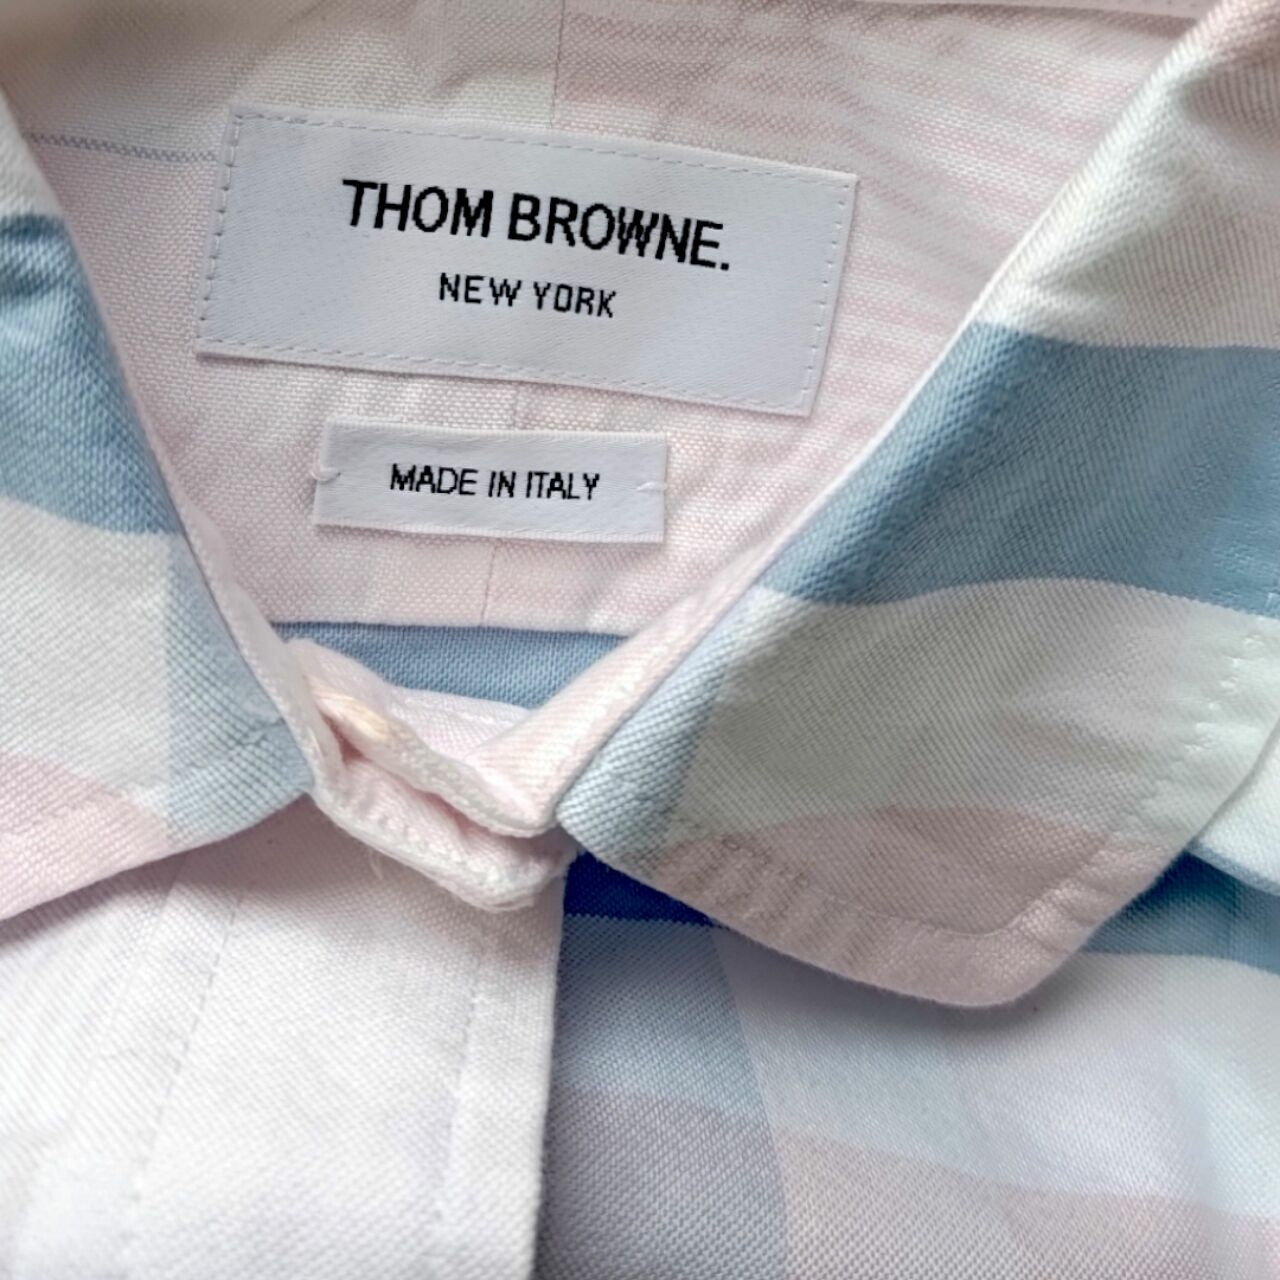 Thom Browne. Oxford Buffalo Check Shirt